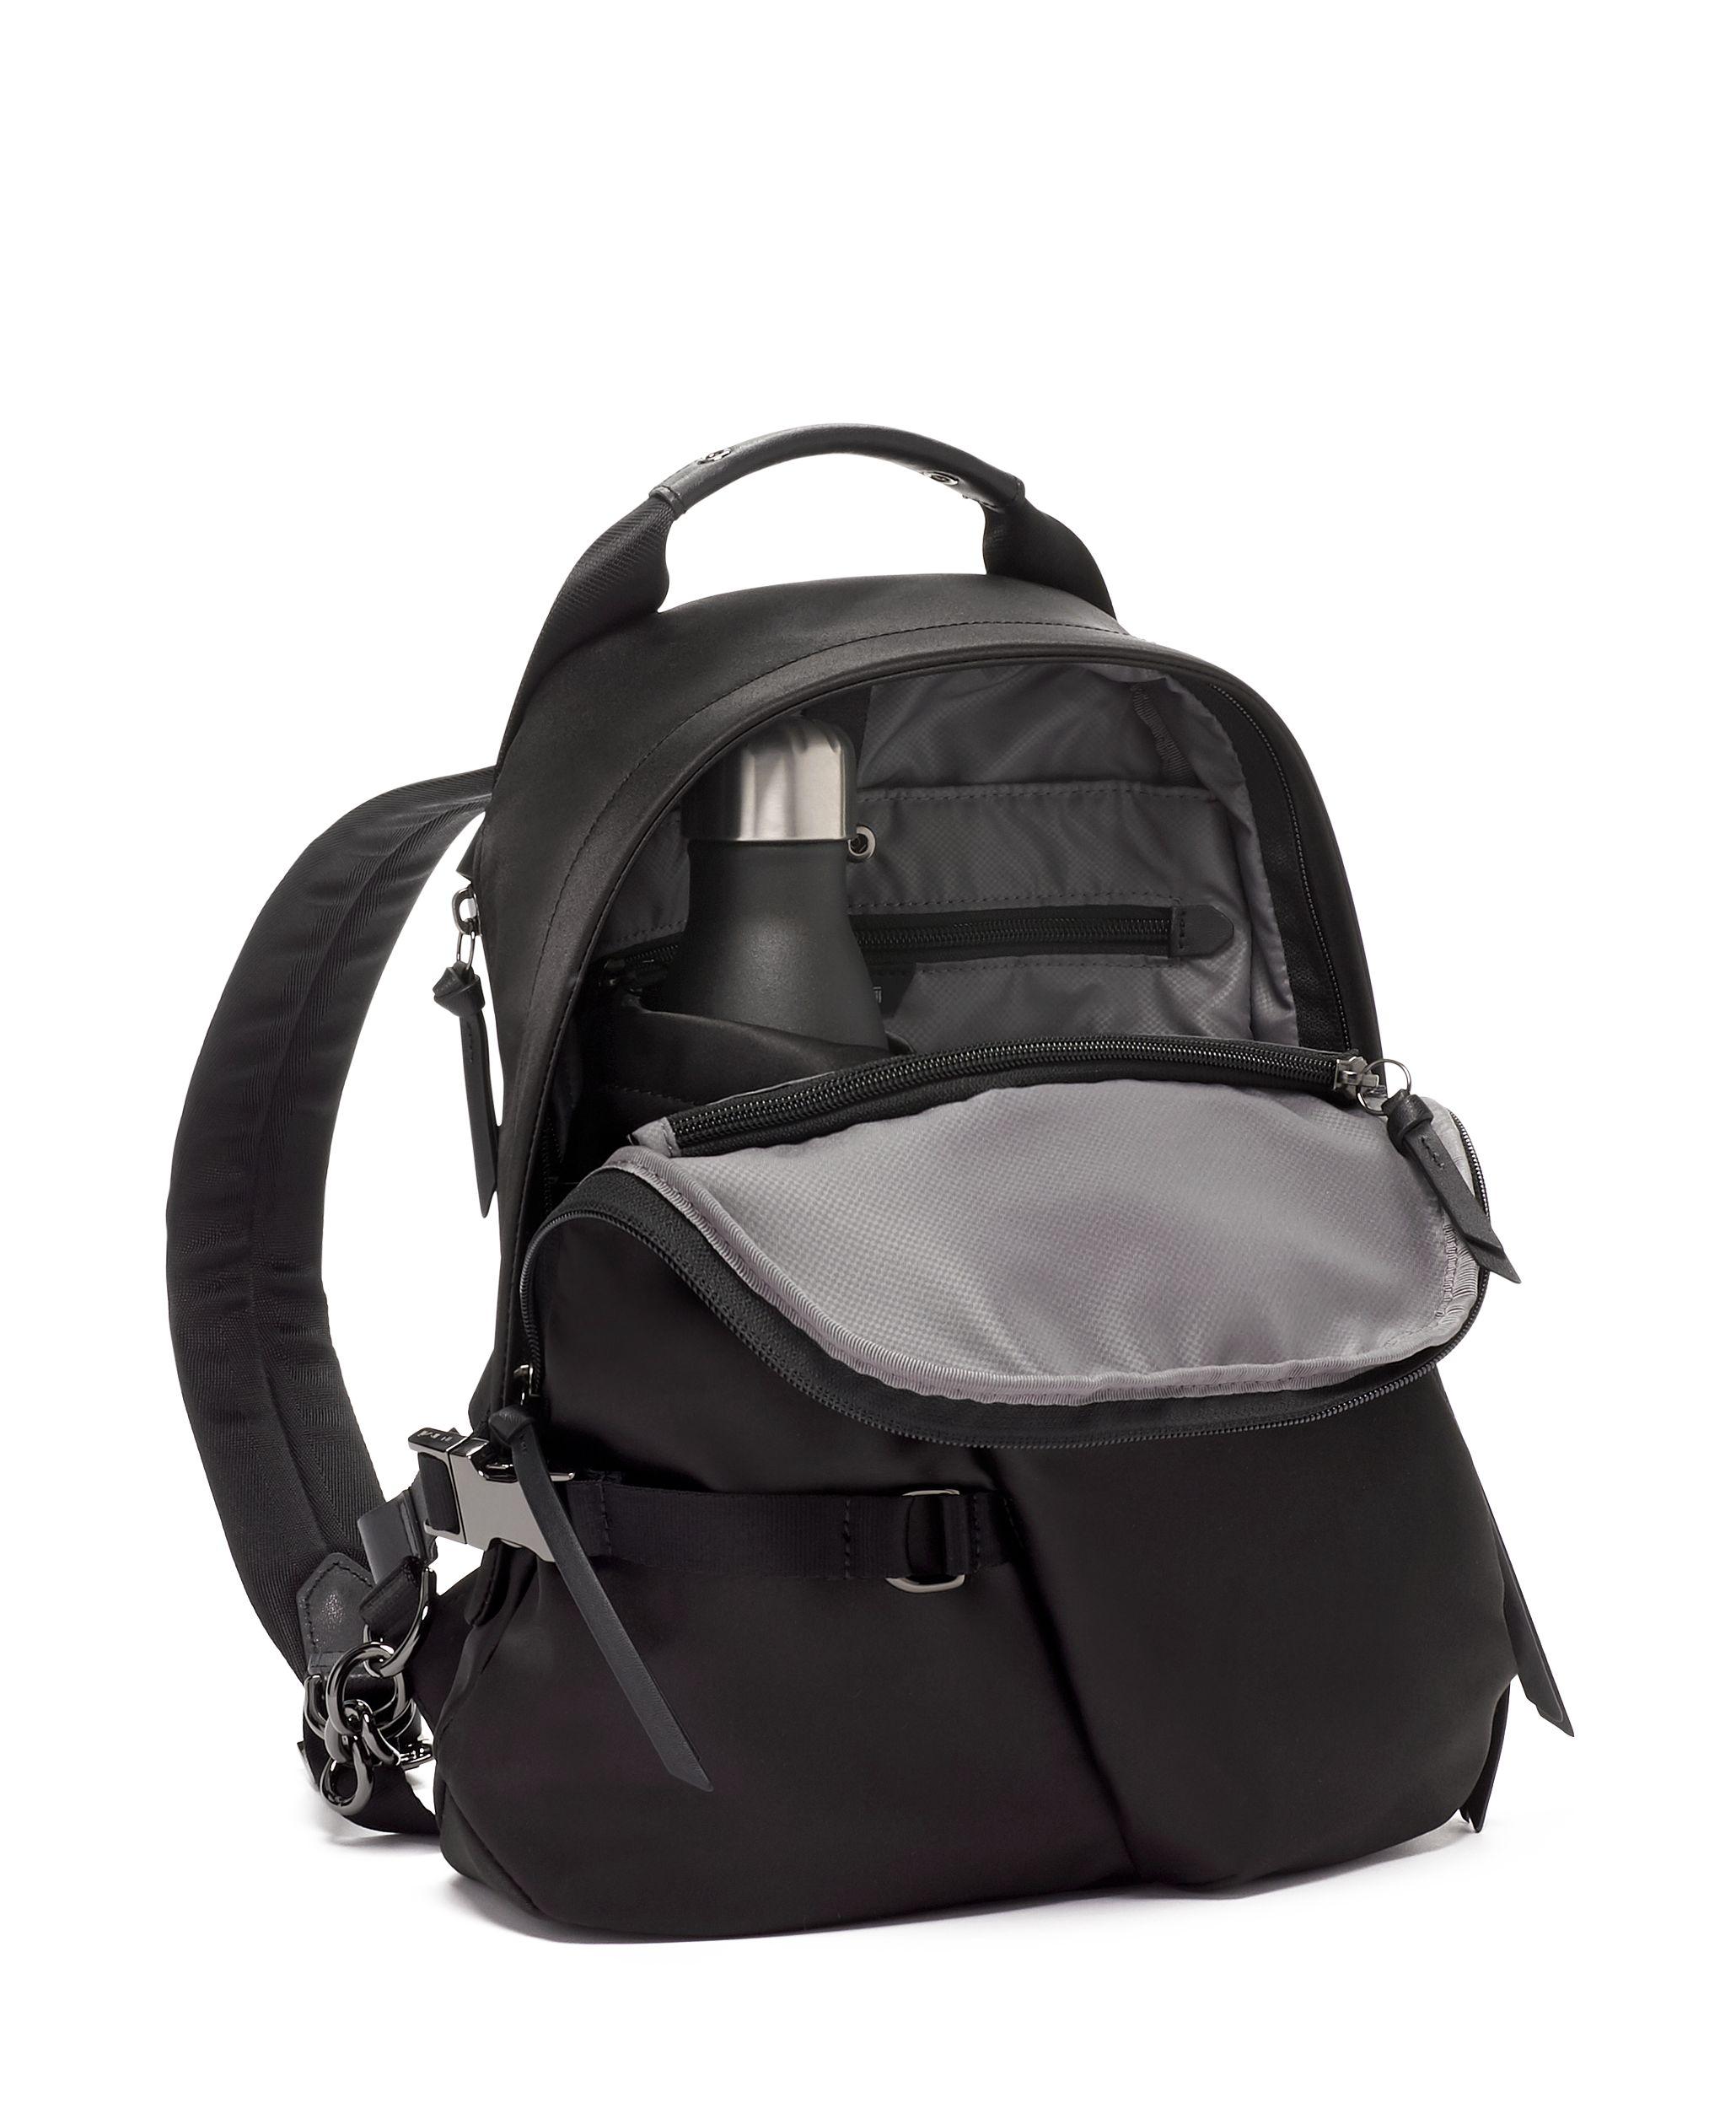 Buy DEVOE (Travel Backpack) Sterling Backpack Online in Singapore | TUMI